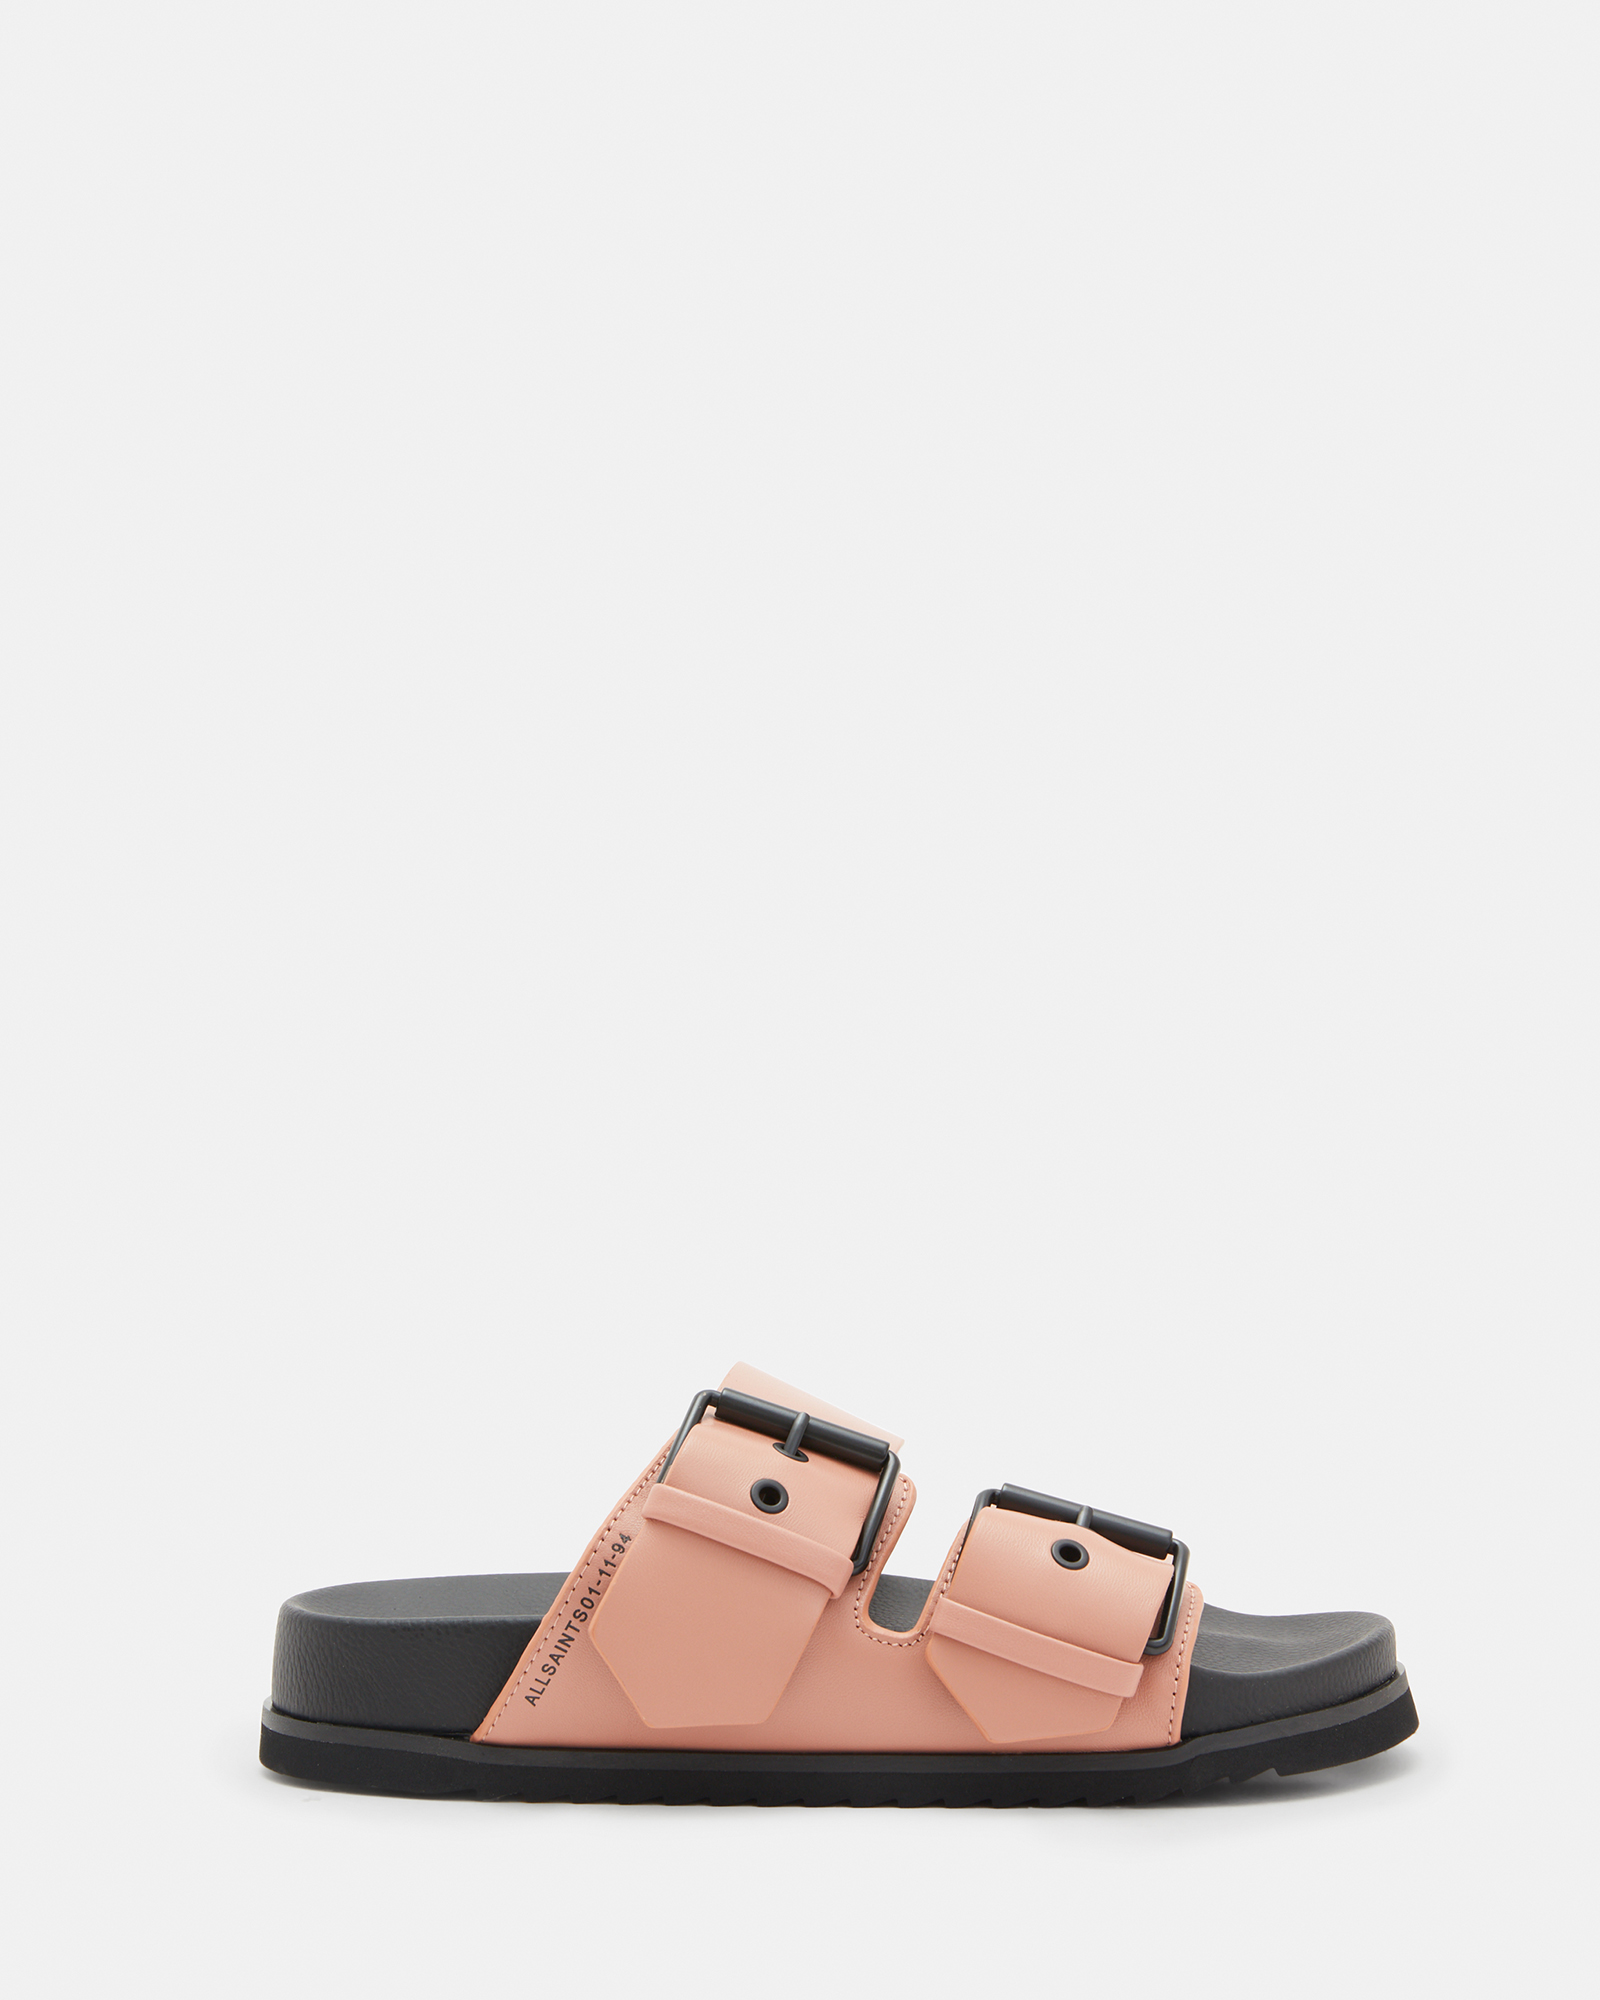 AllSaints Sian Leather Buckle Sandals,, Pink, Size: UK